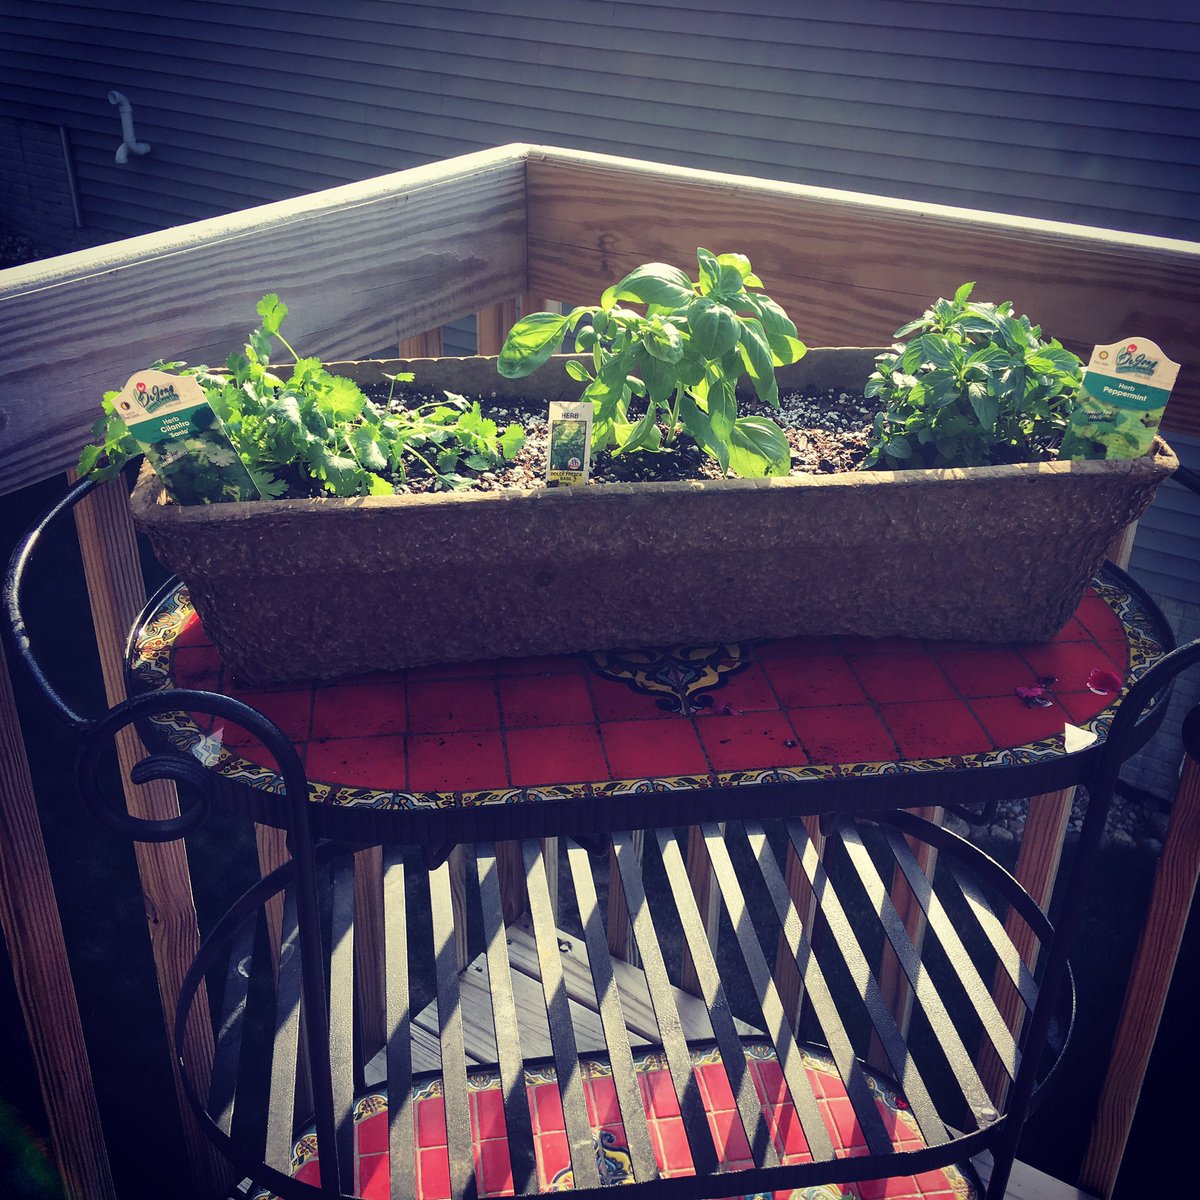 My summer herbs are looking good! #basil #cilantro #mint #freshherbs #gardeningsuccess #newhobby #sunshine #ilovesummer☀️